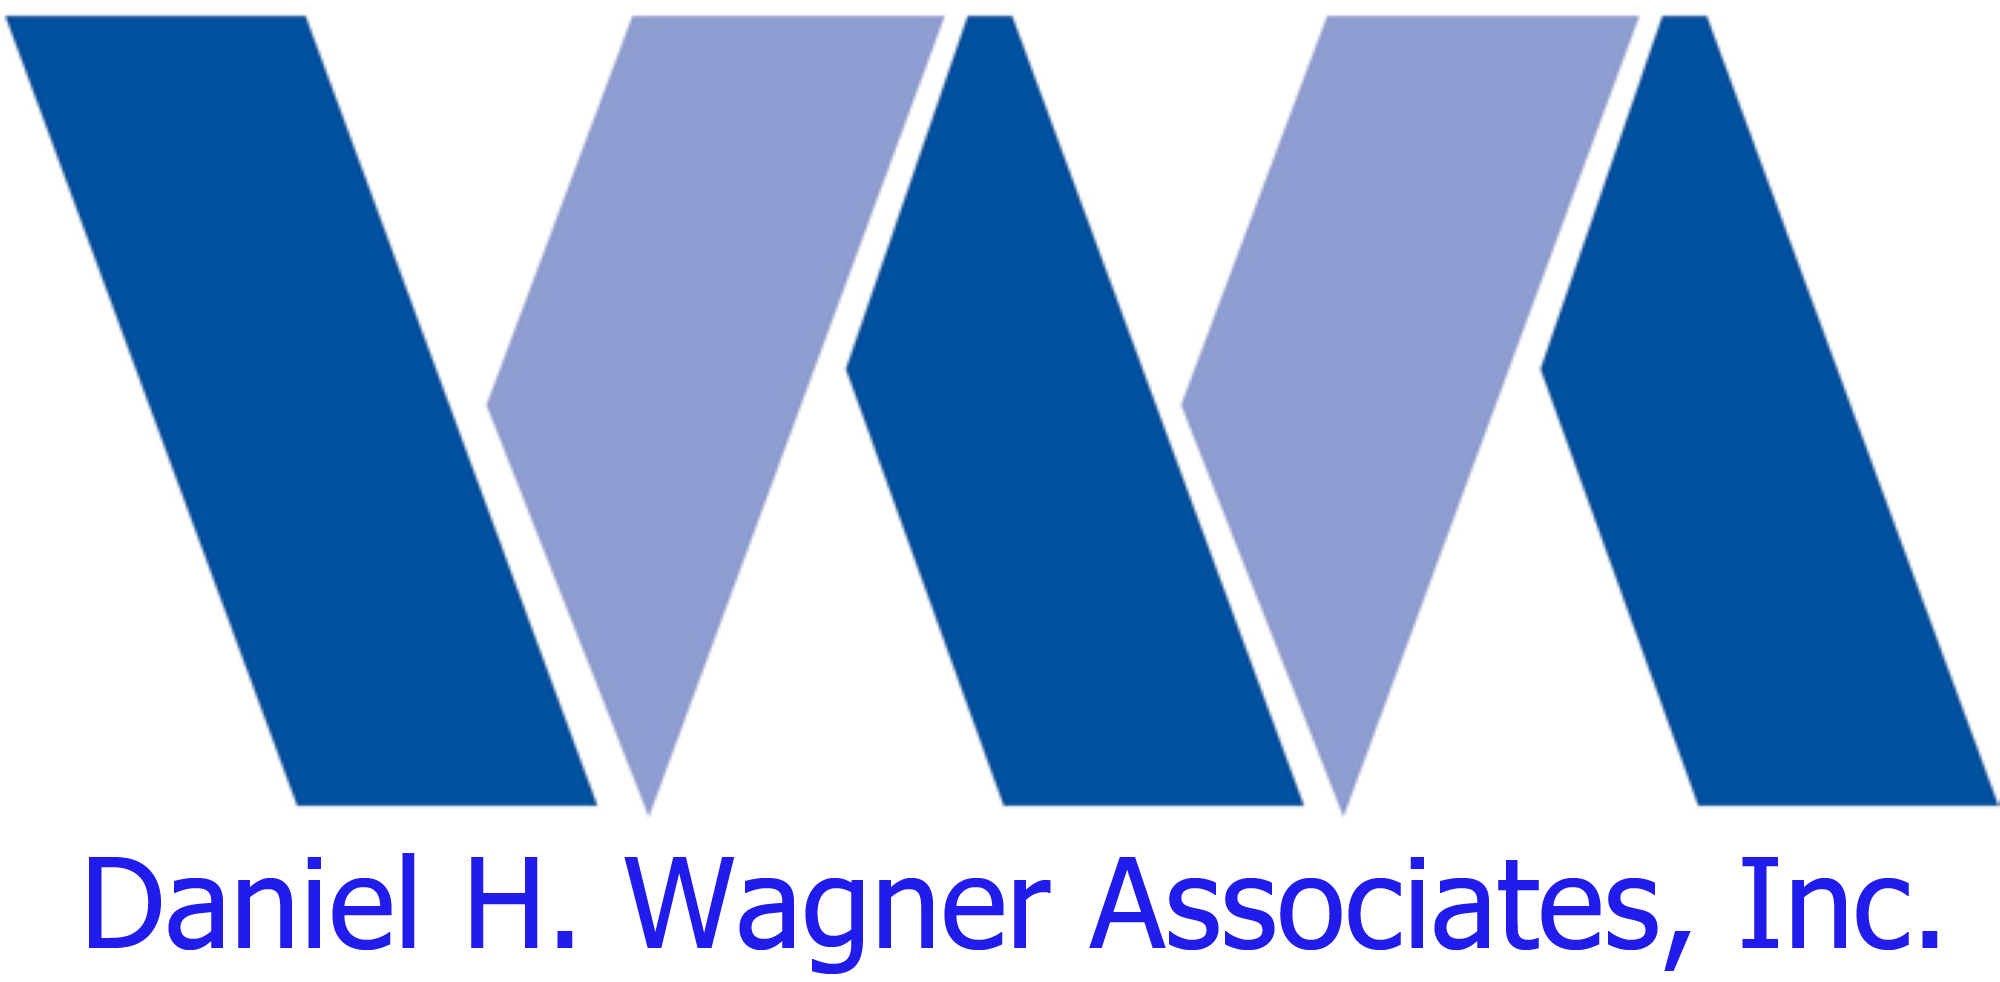 Daniel H. Wagner Associates, Inc.